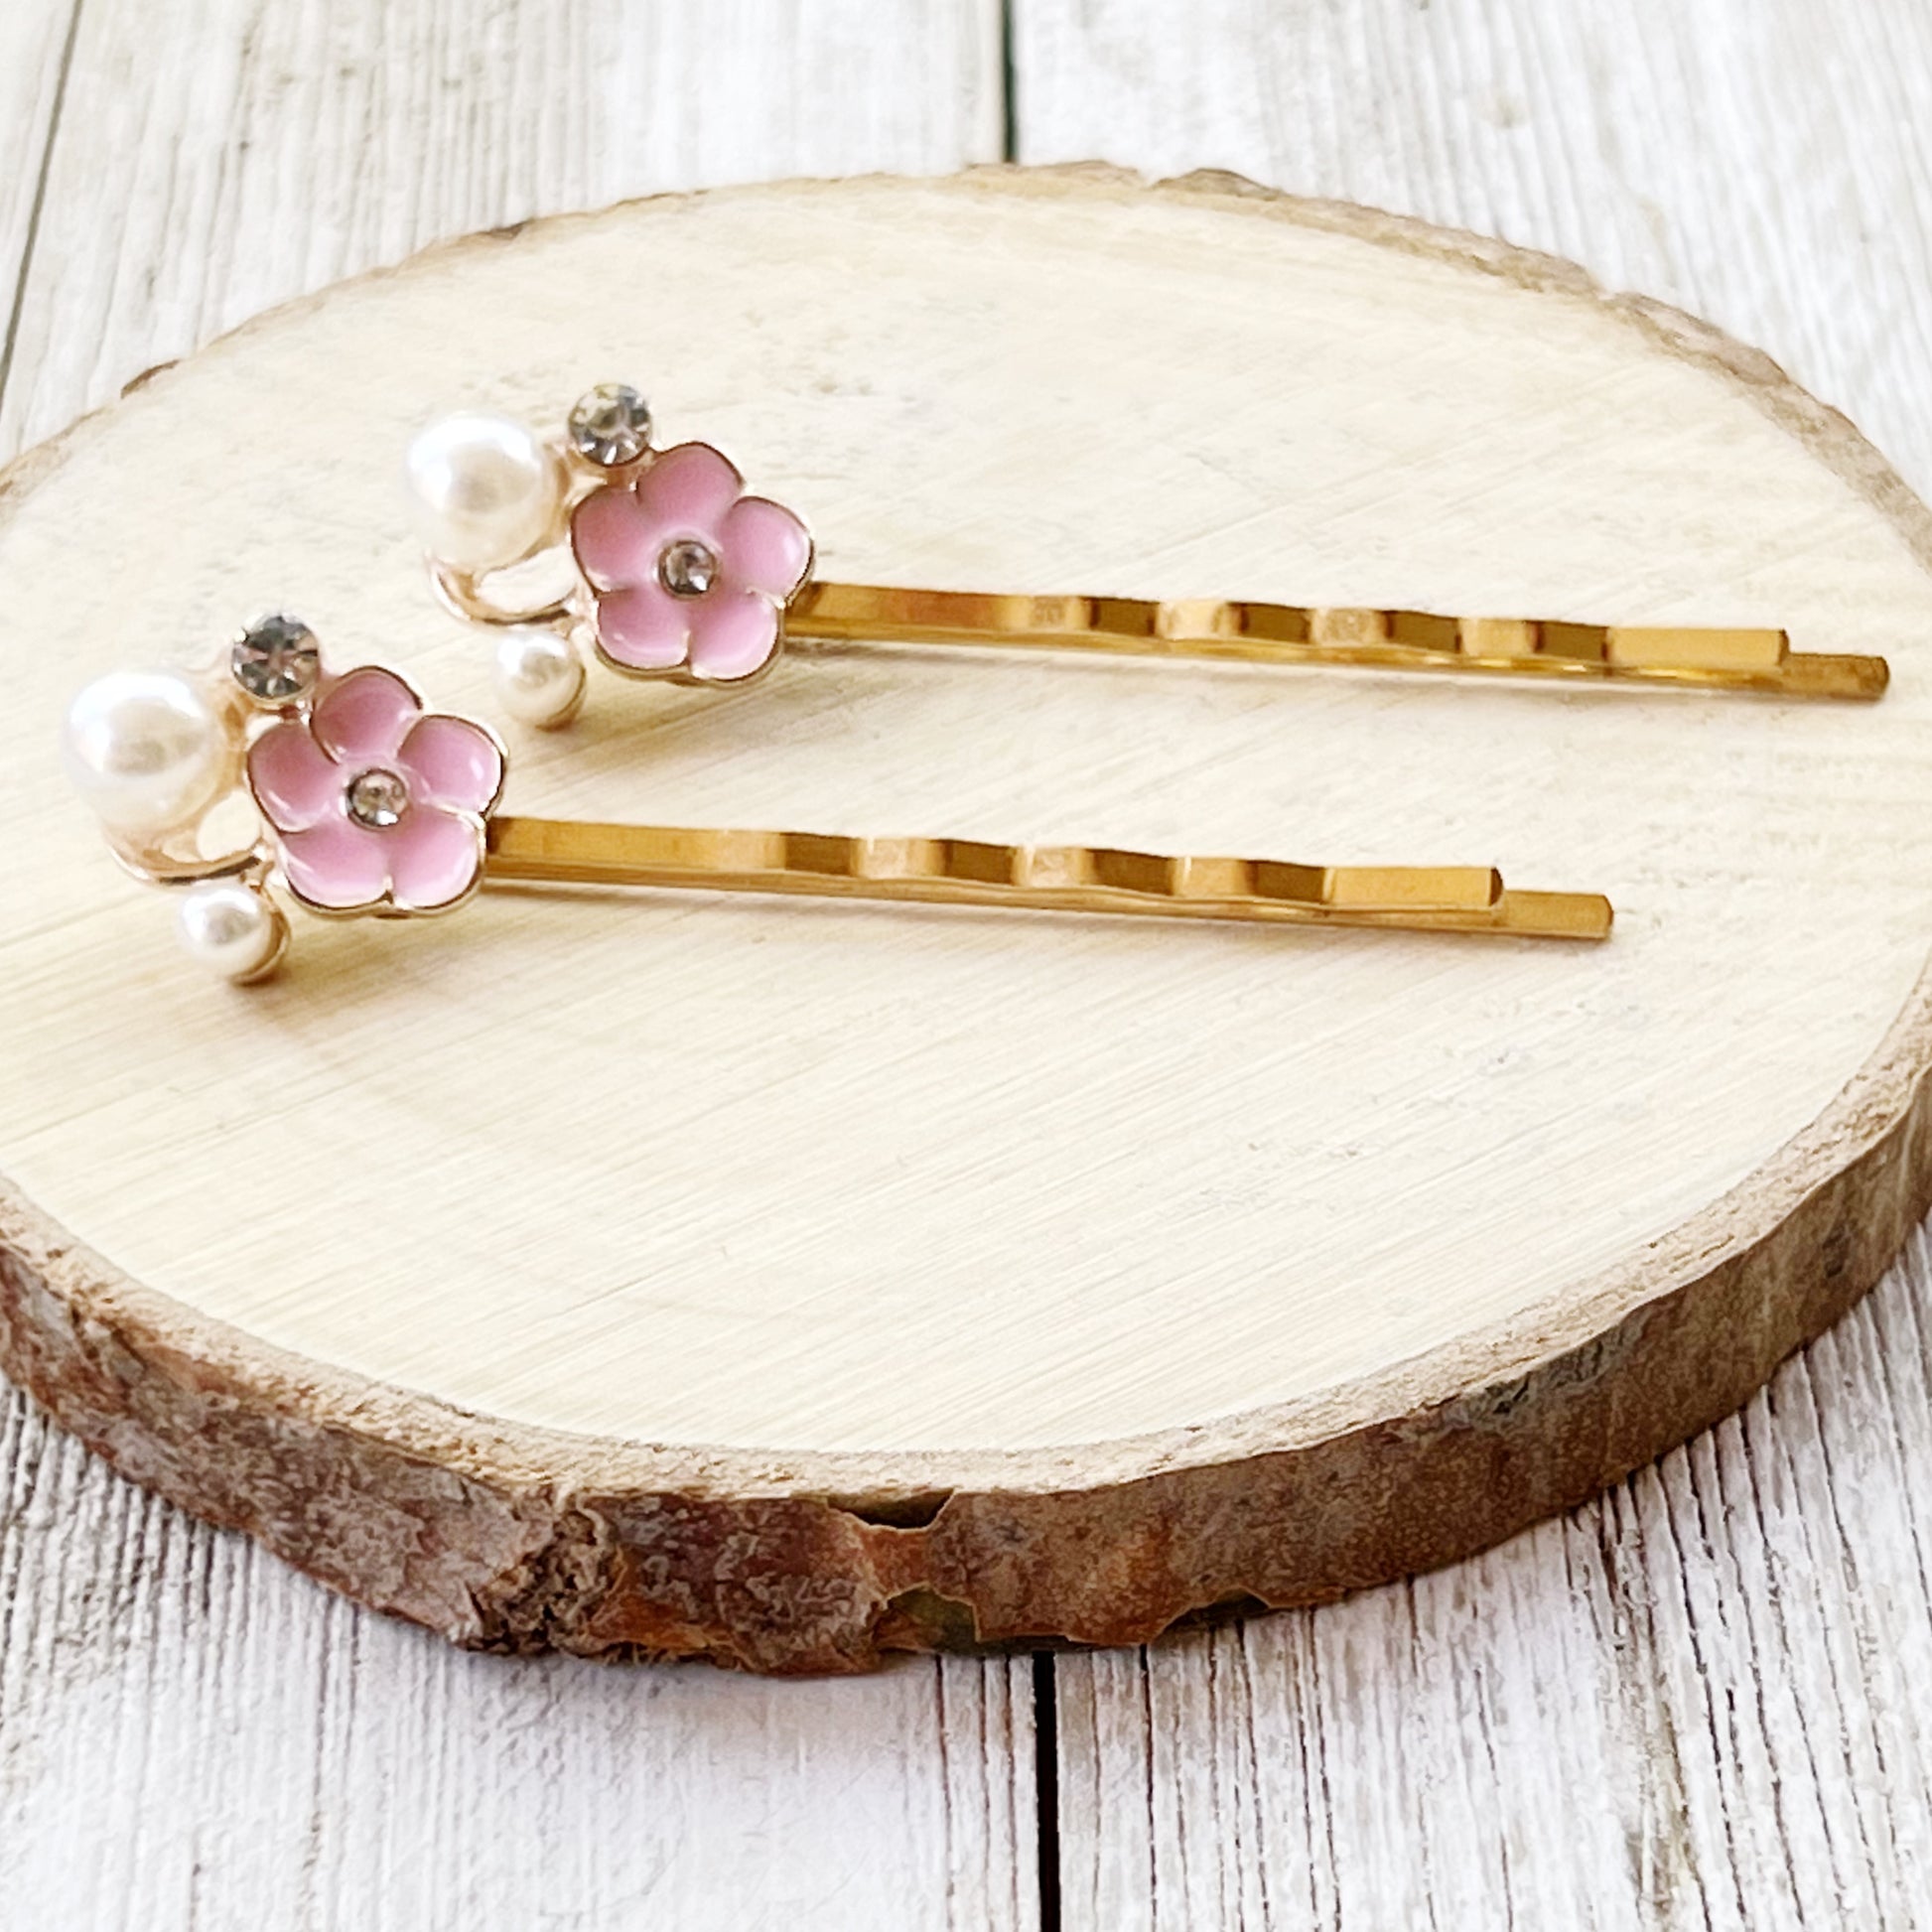 Pink Pearl & Rhinestone Flower Hair Pins: Decorative Boho Accessories for Women